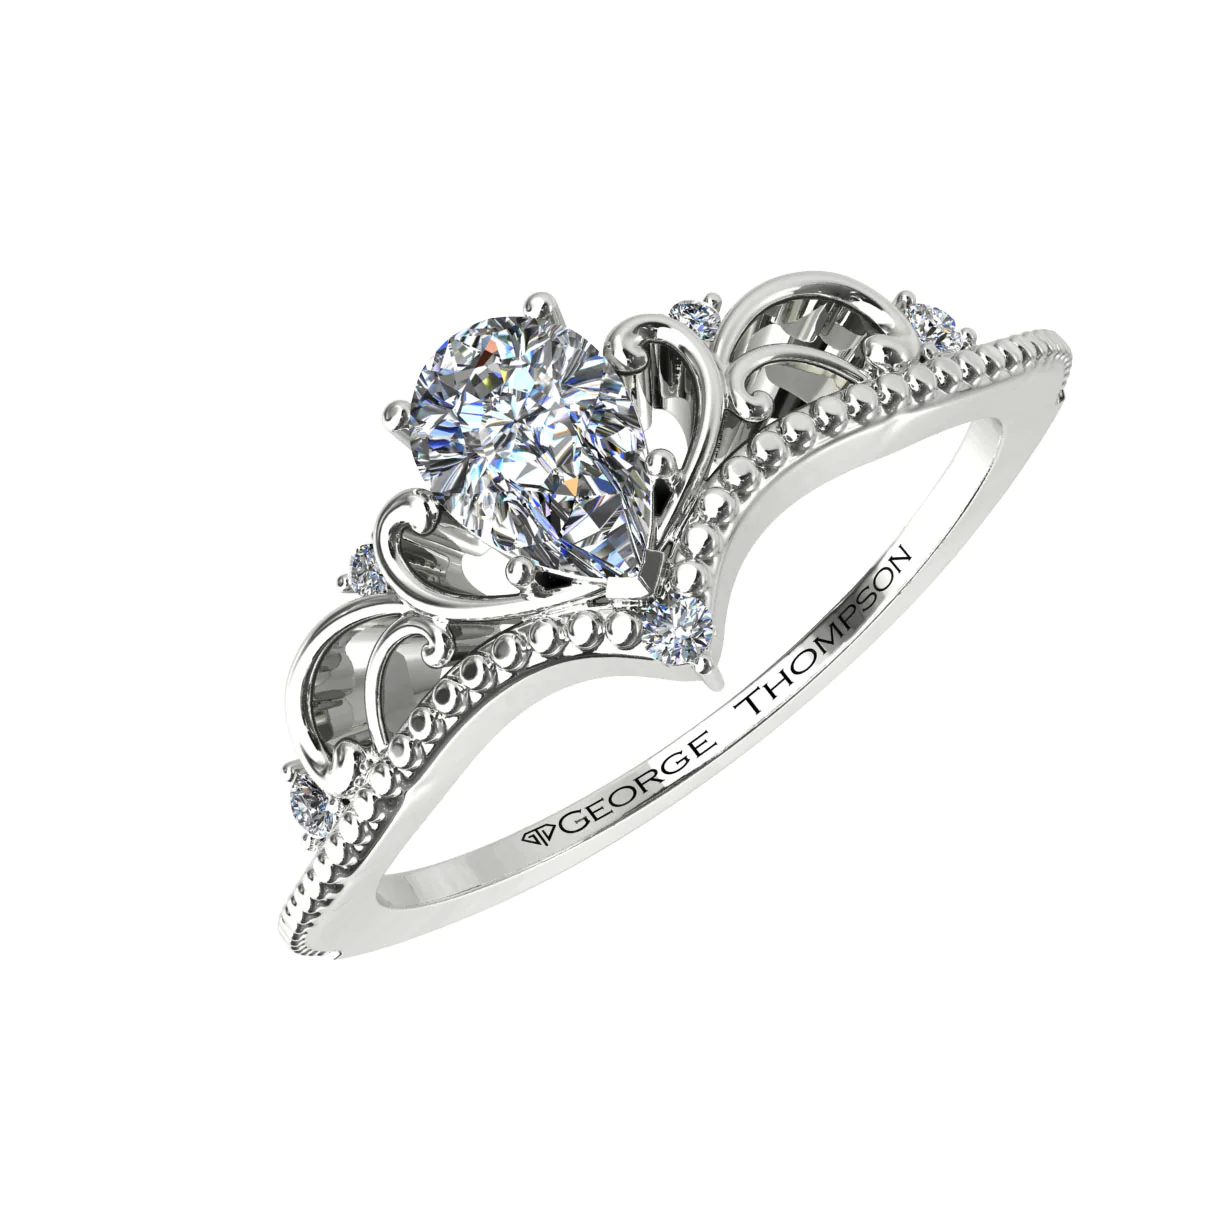 pear shape diamond engagement ring